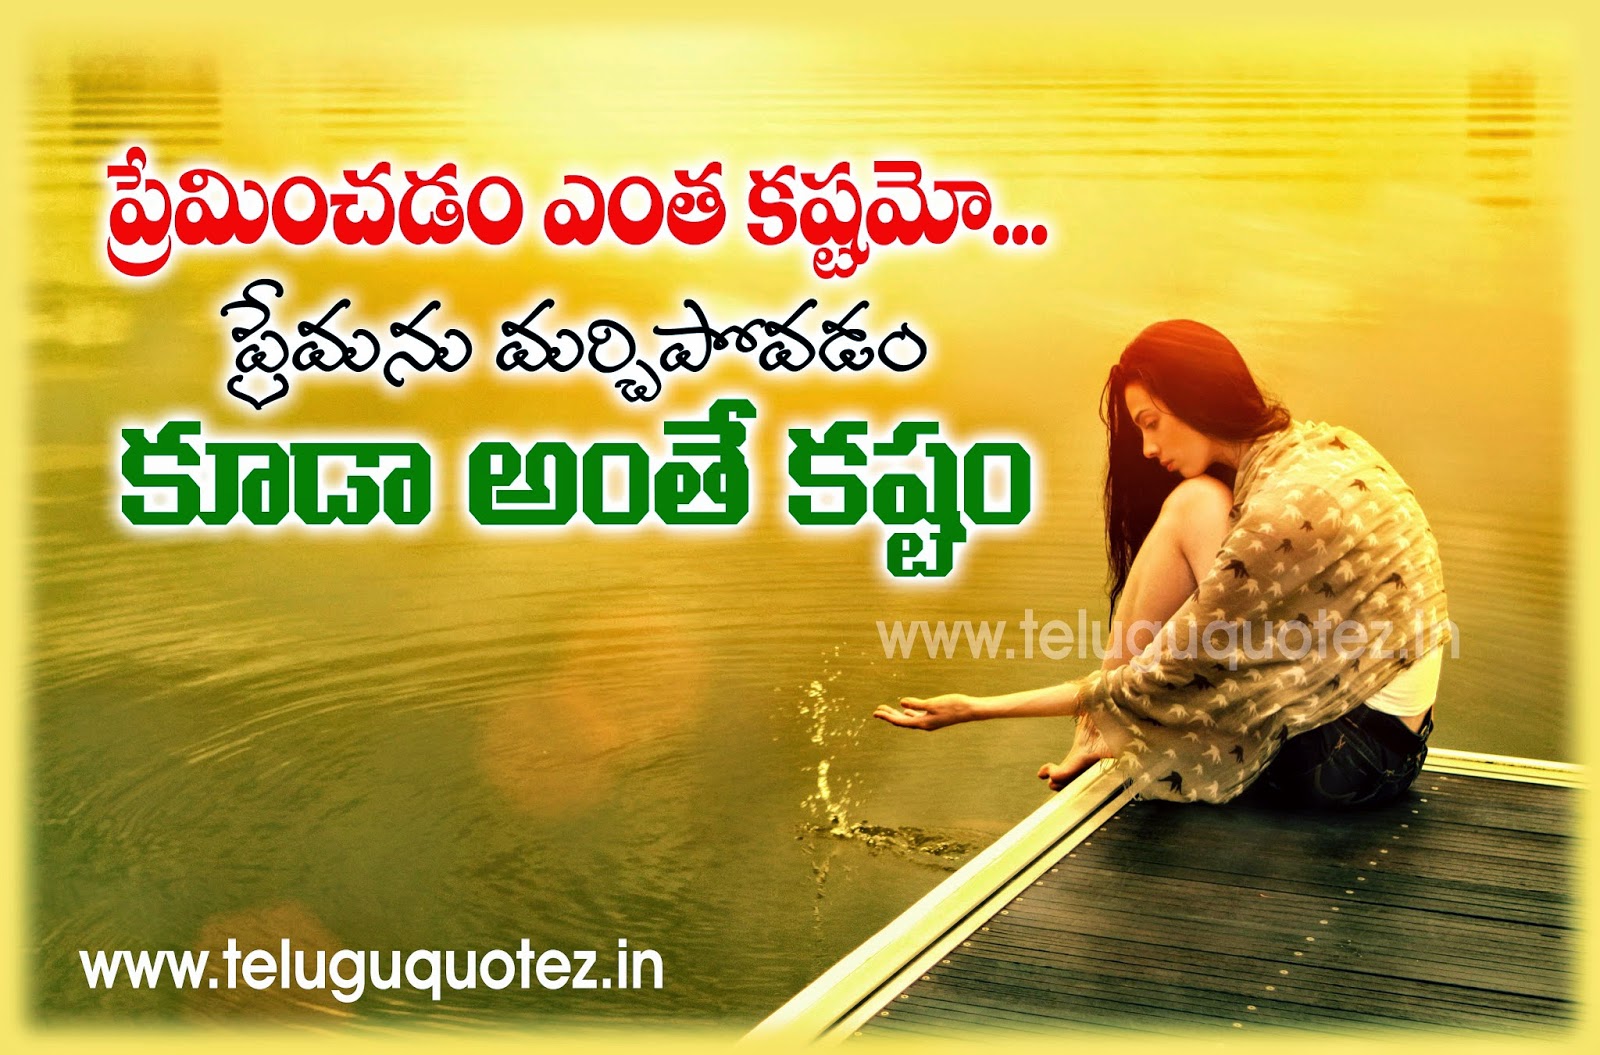 Telugu quotes on Love | naveengfx